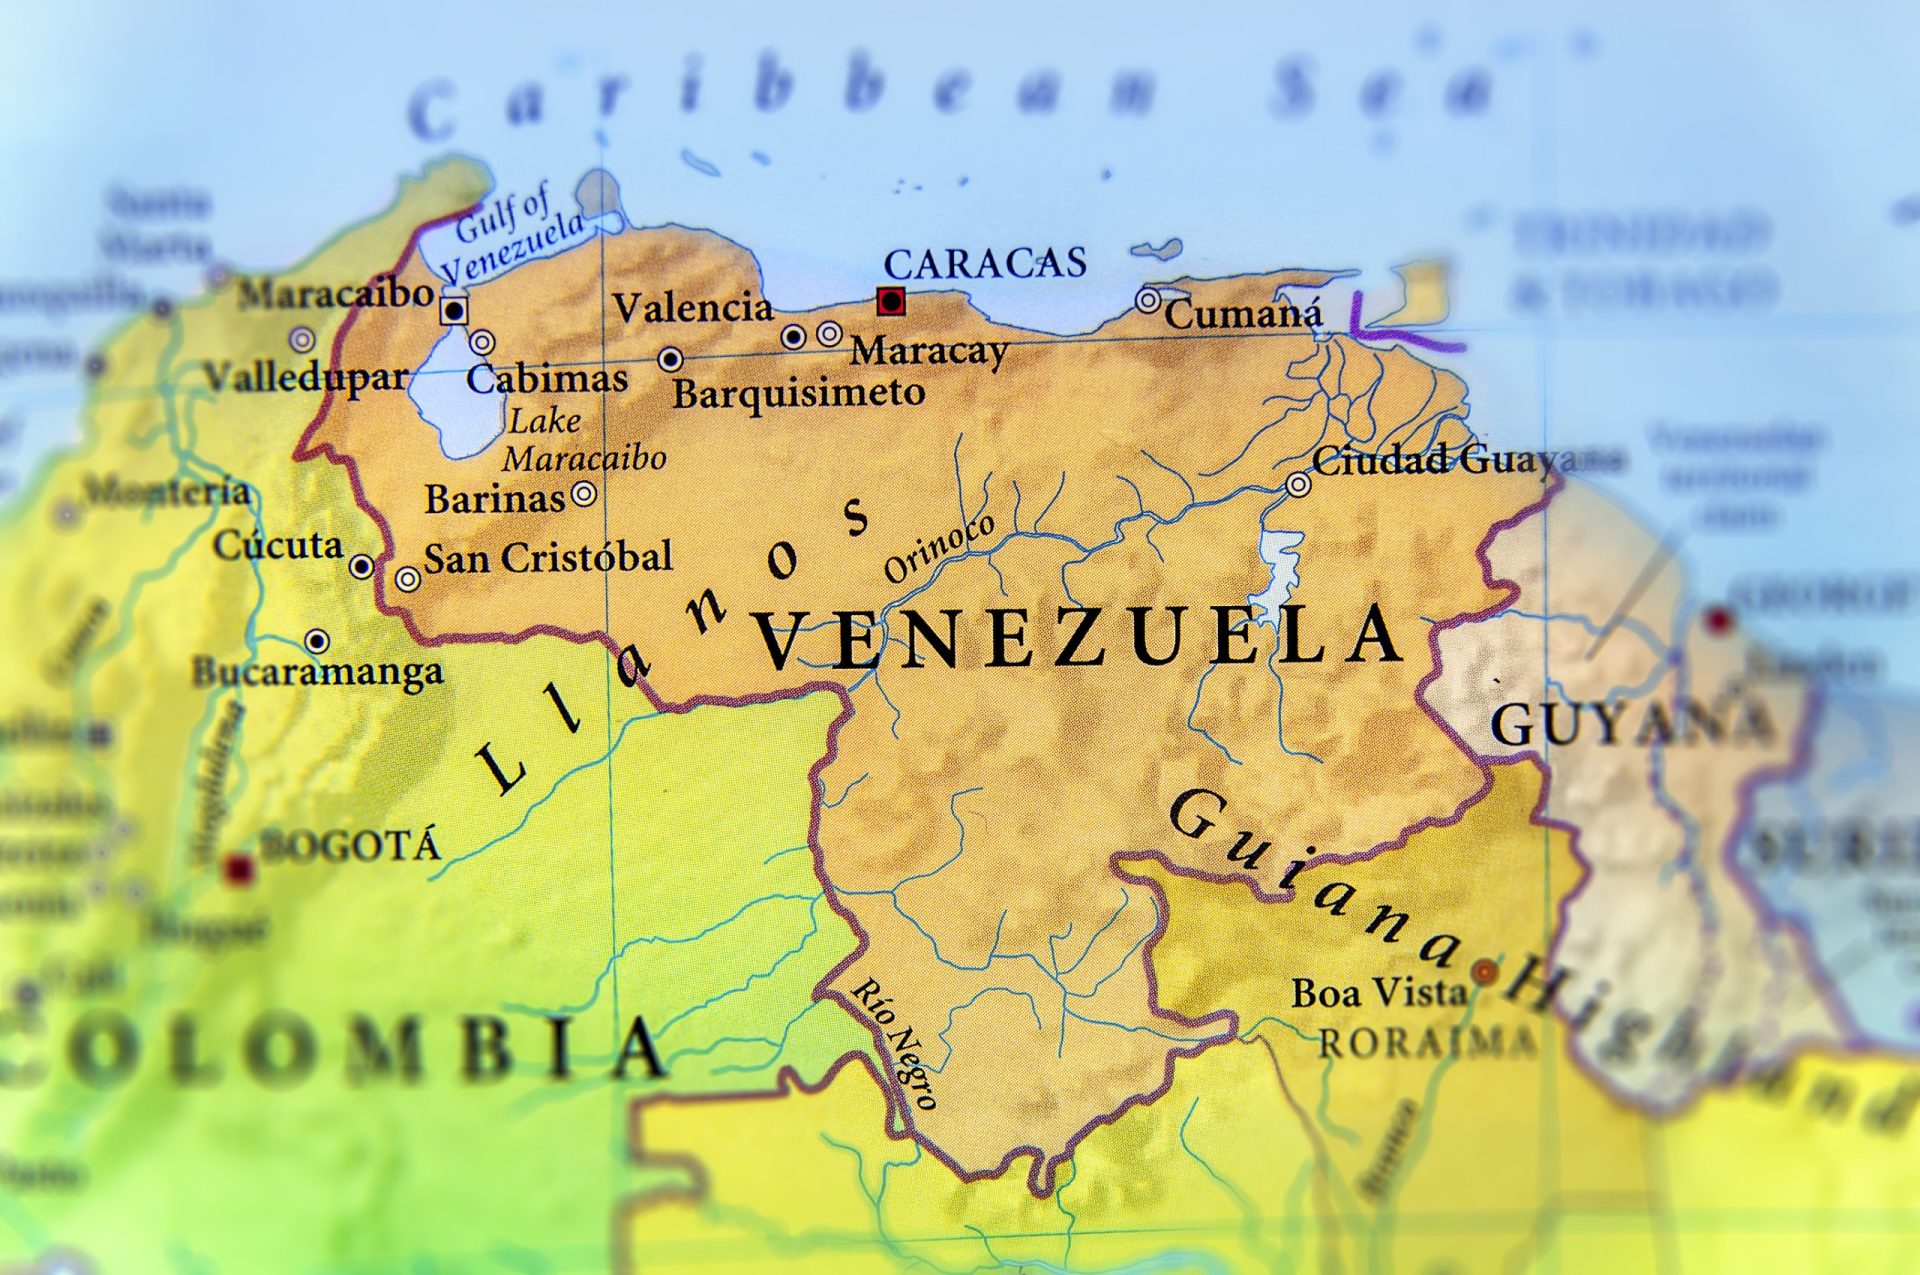 Diplomata venezuelano acusado de morte de embaixadora